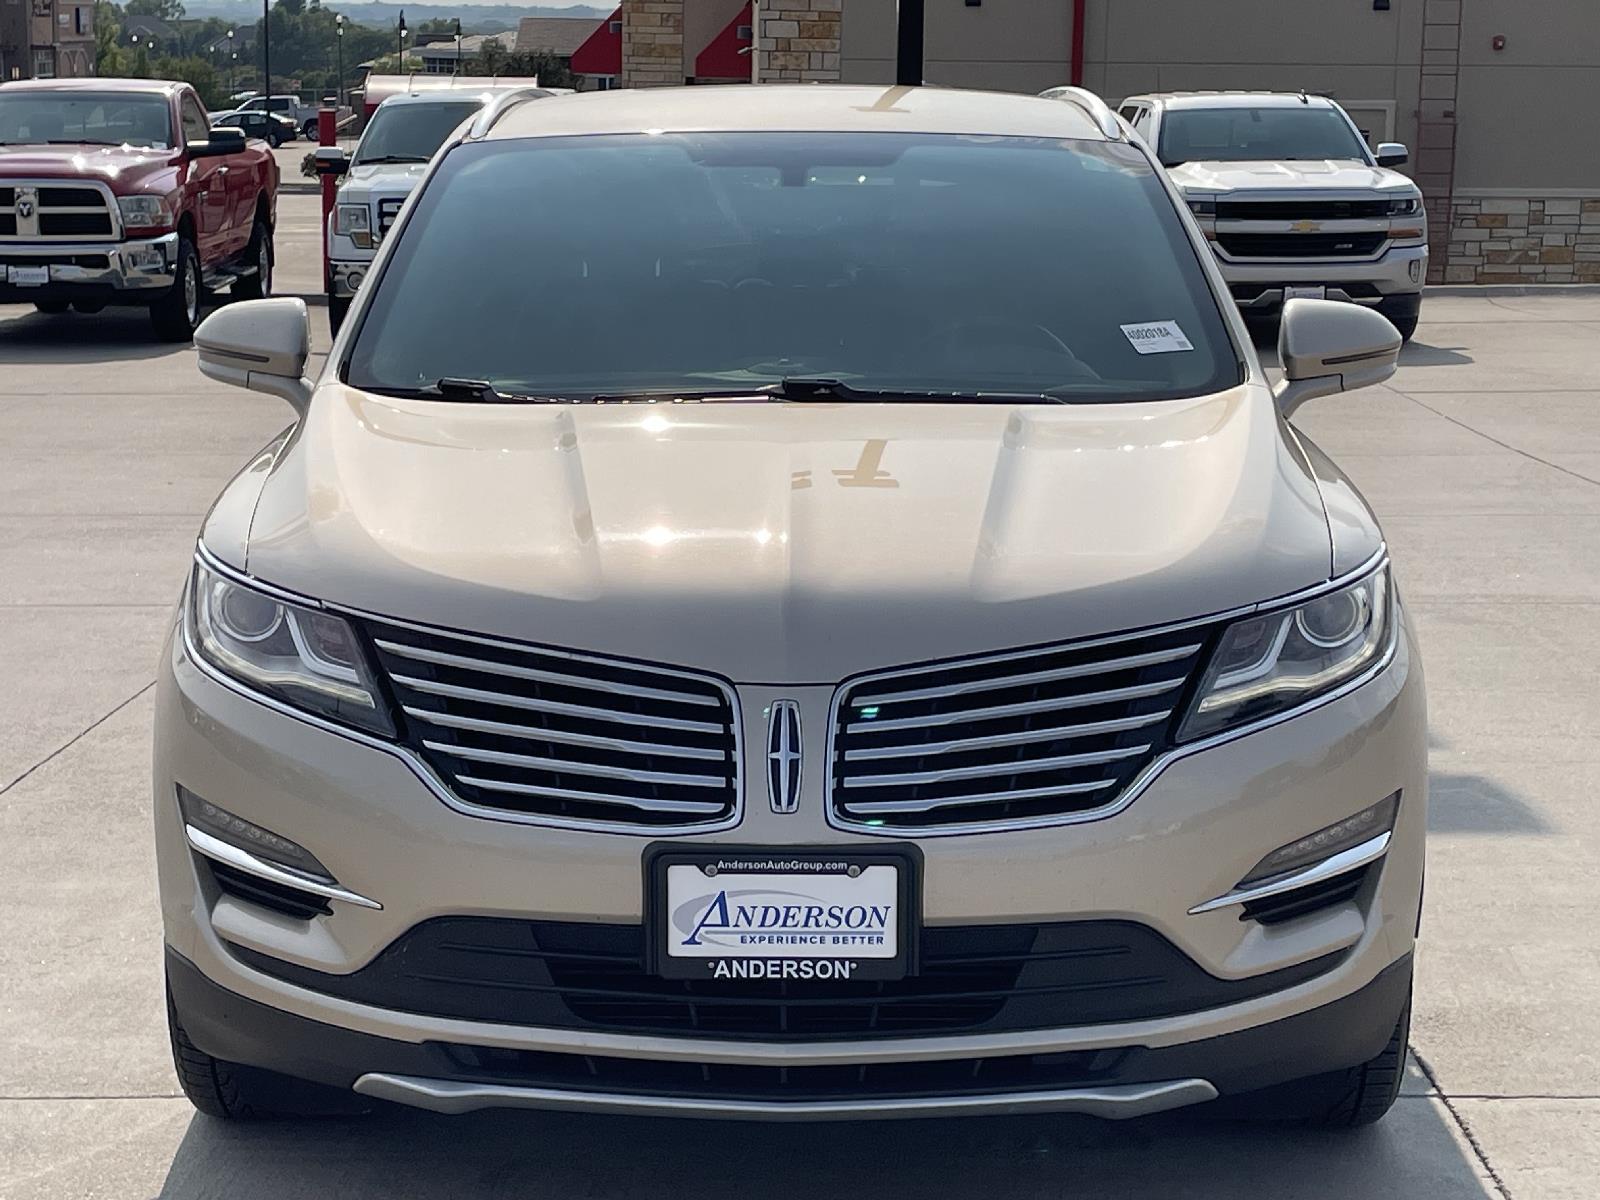 Used 2017 Lincoln MKC Select SUV for sale in Lincoln NE